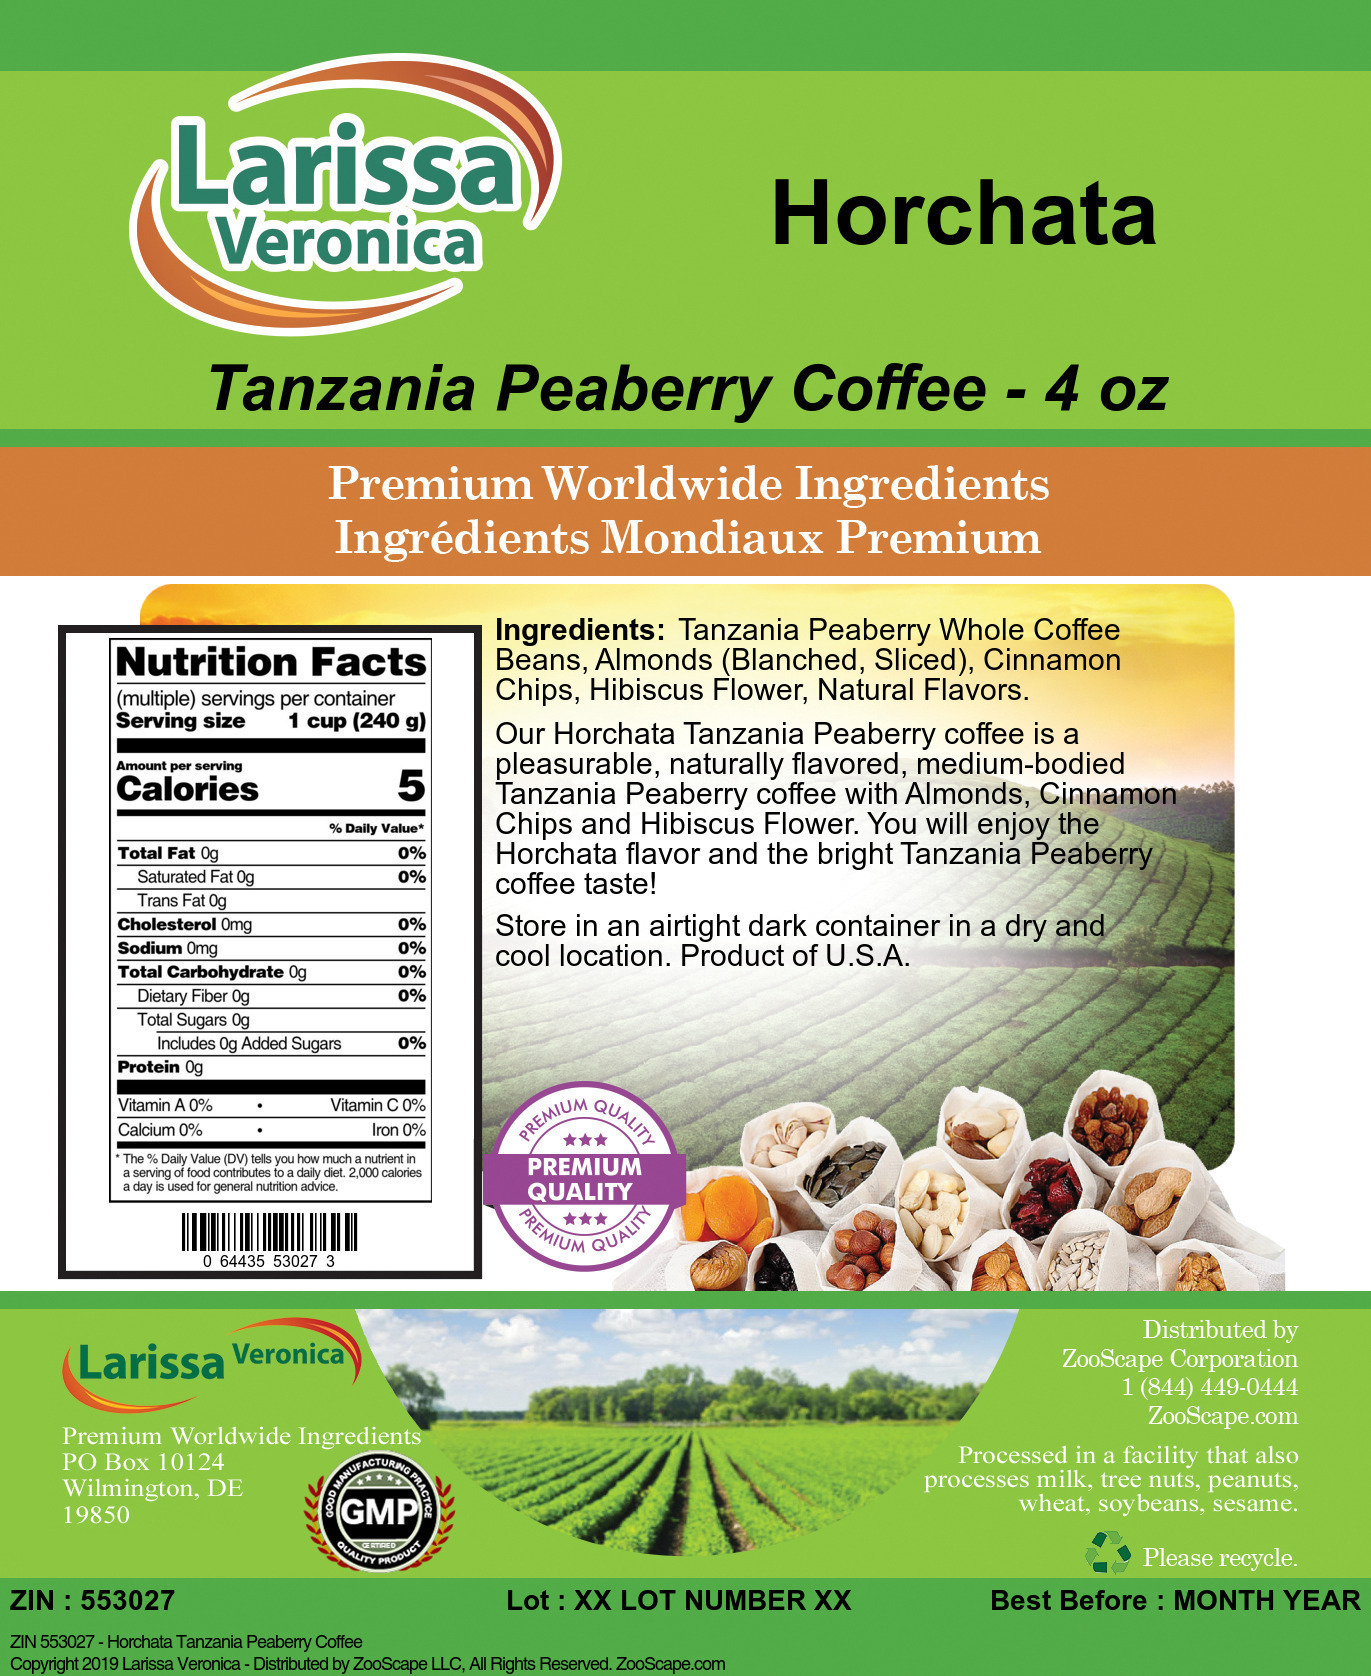 Horchata Tanzania Peaberry Coffee - Label